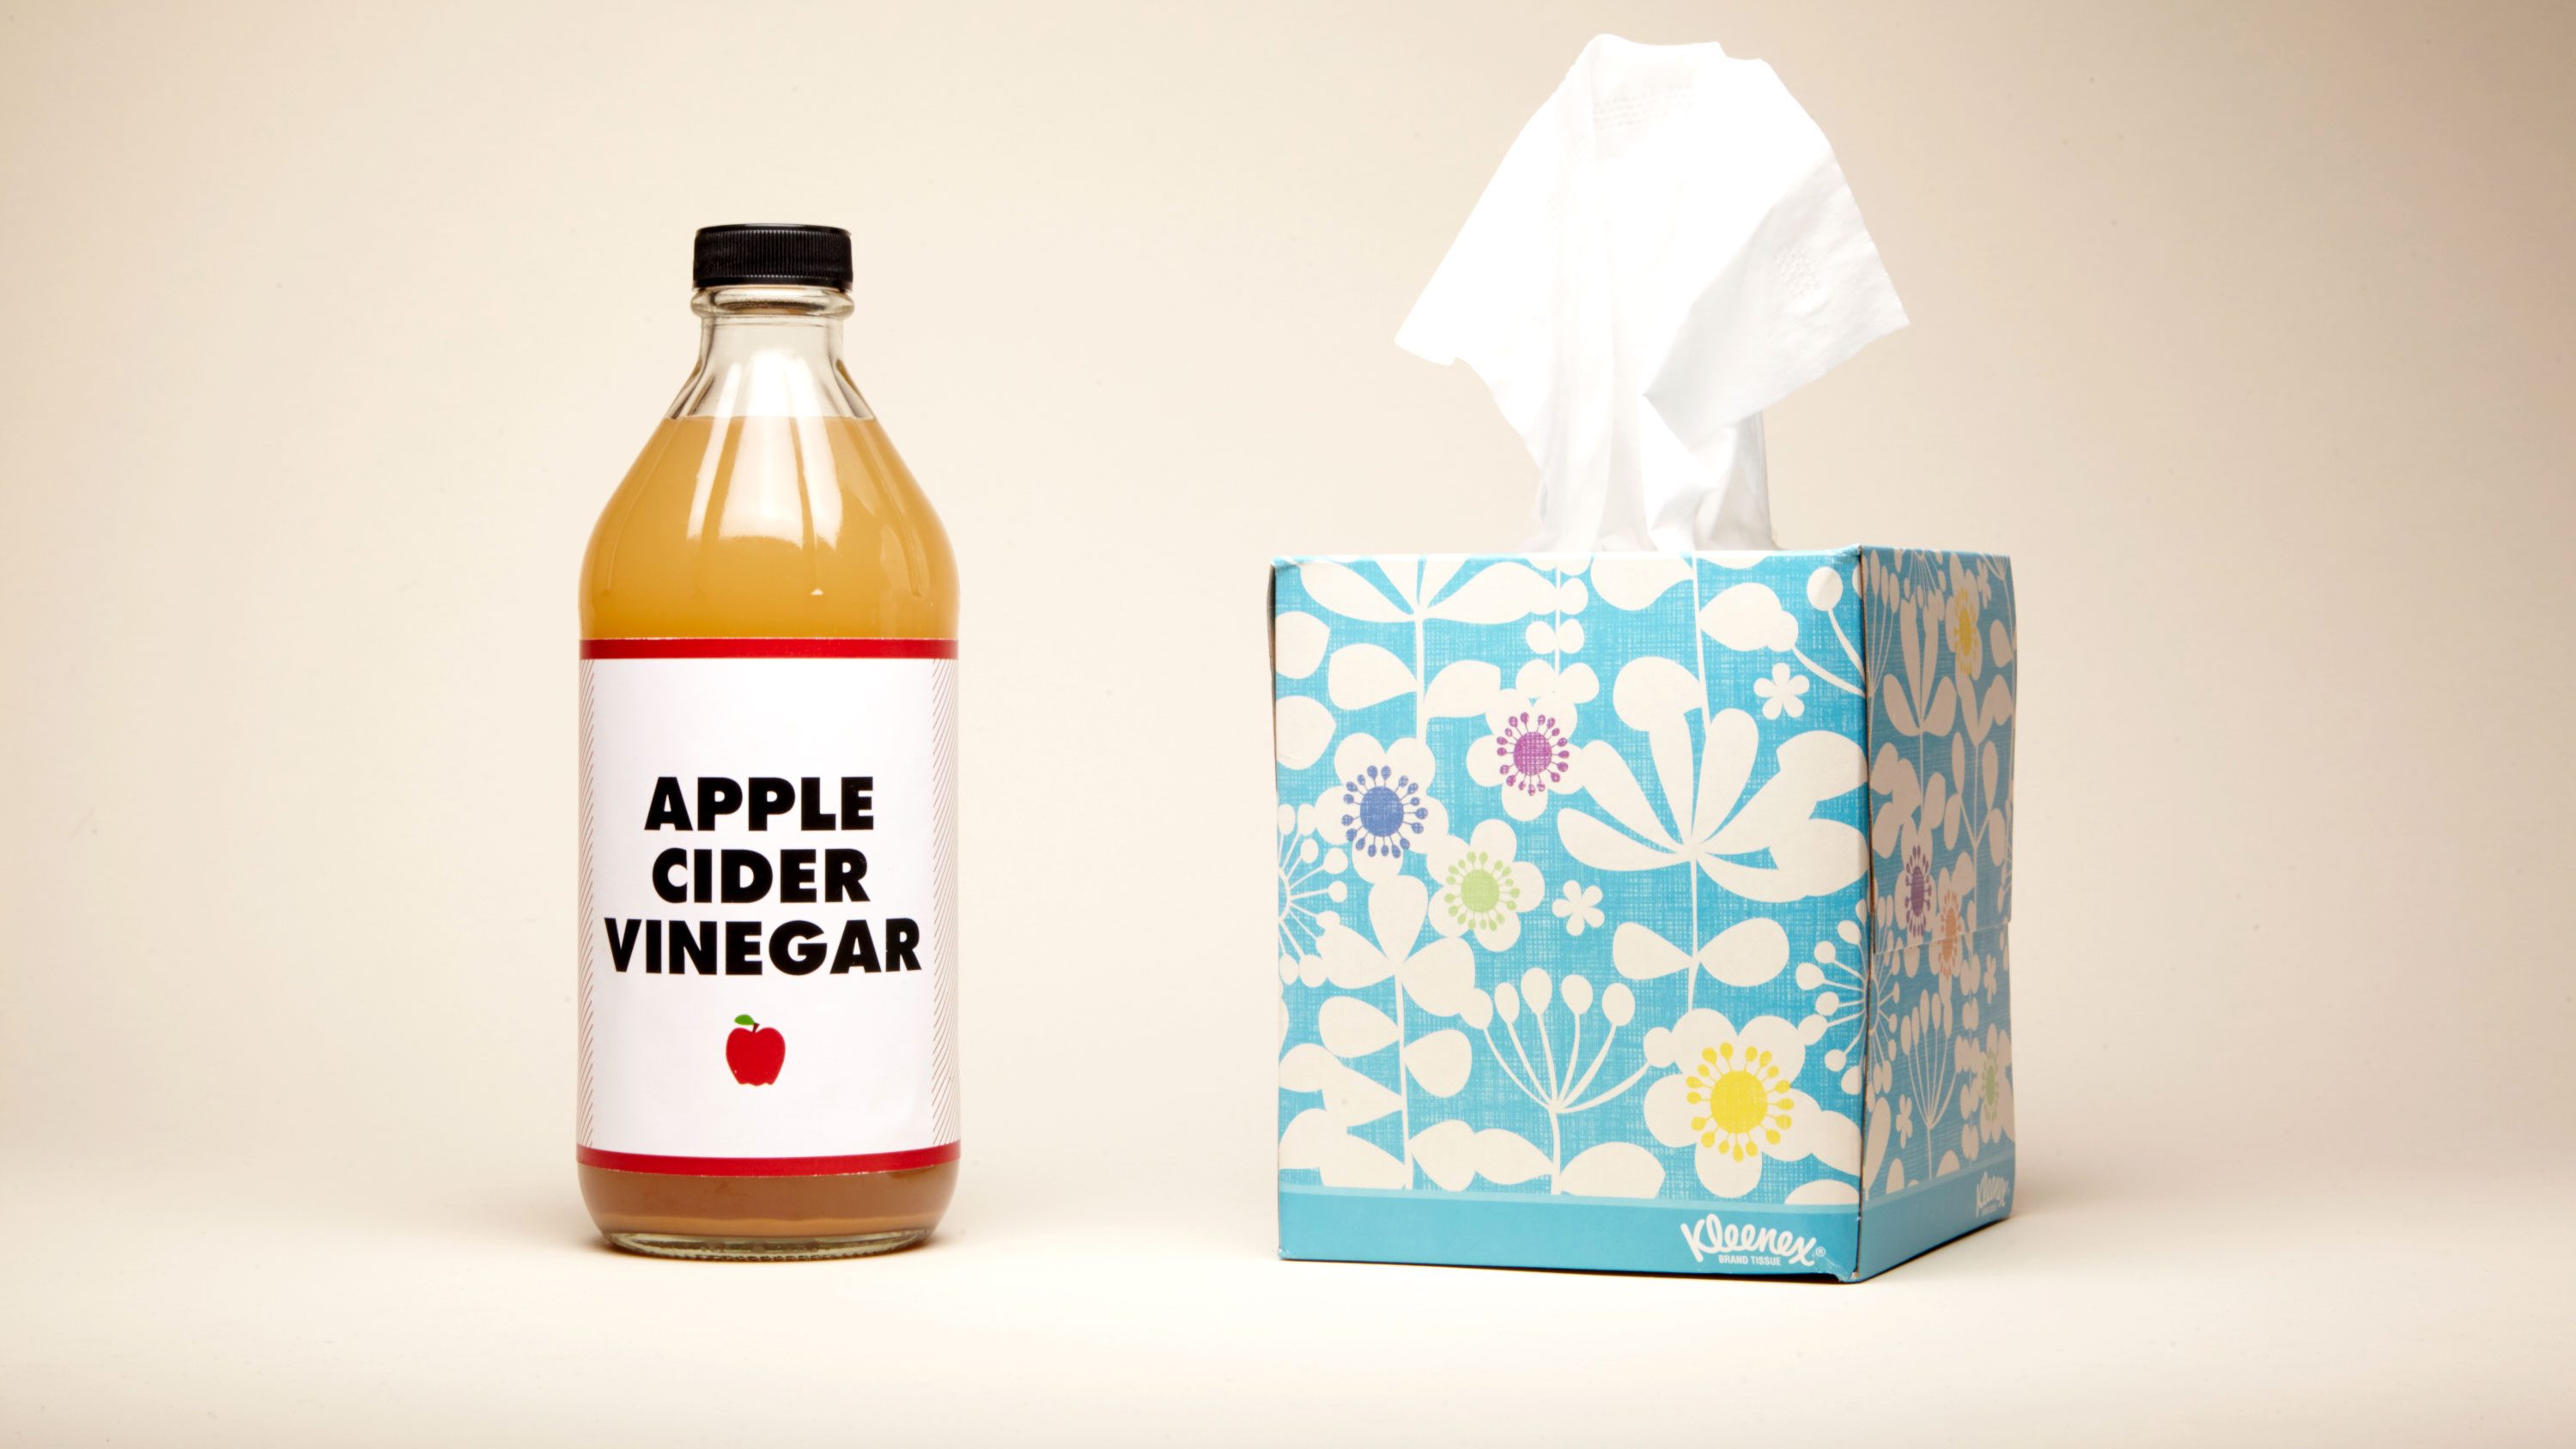 Apple cider vinegar clears a stuffy nose